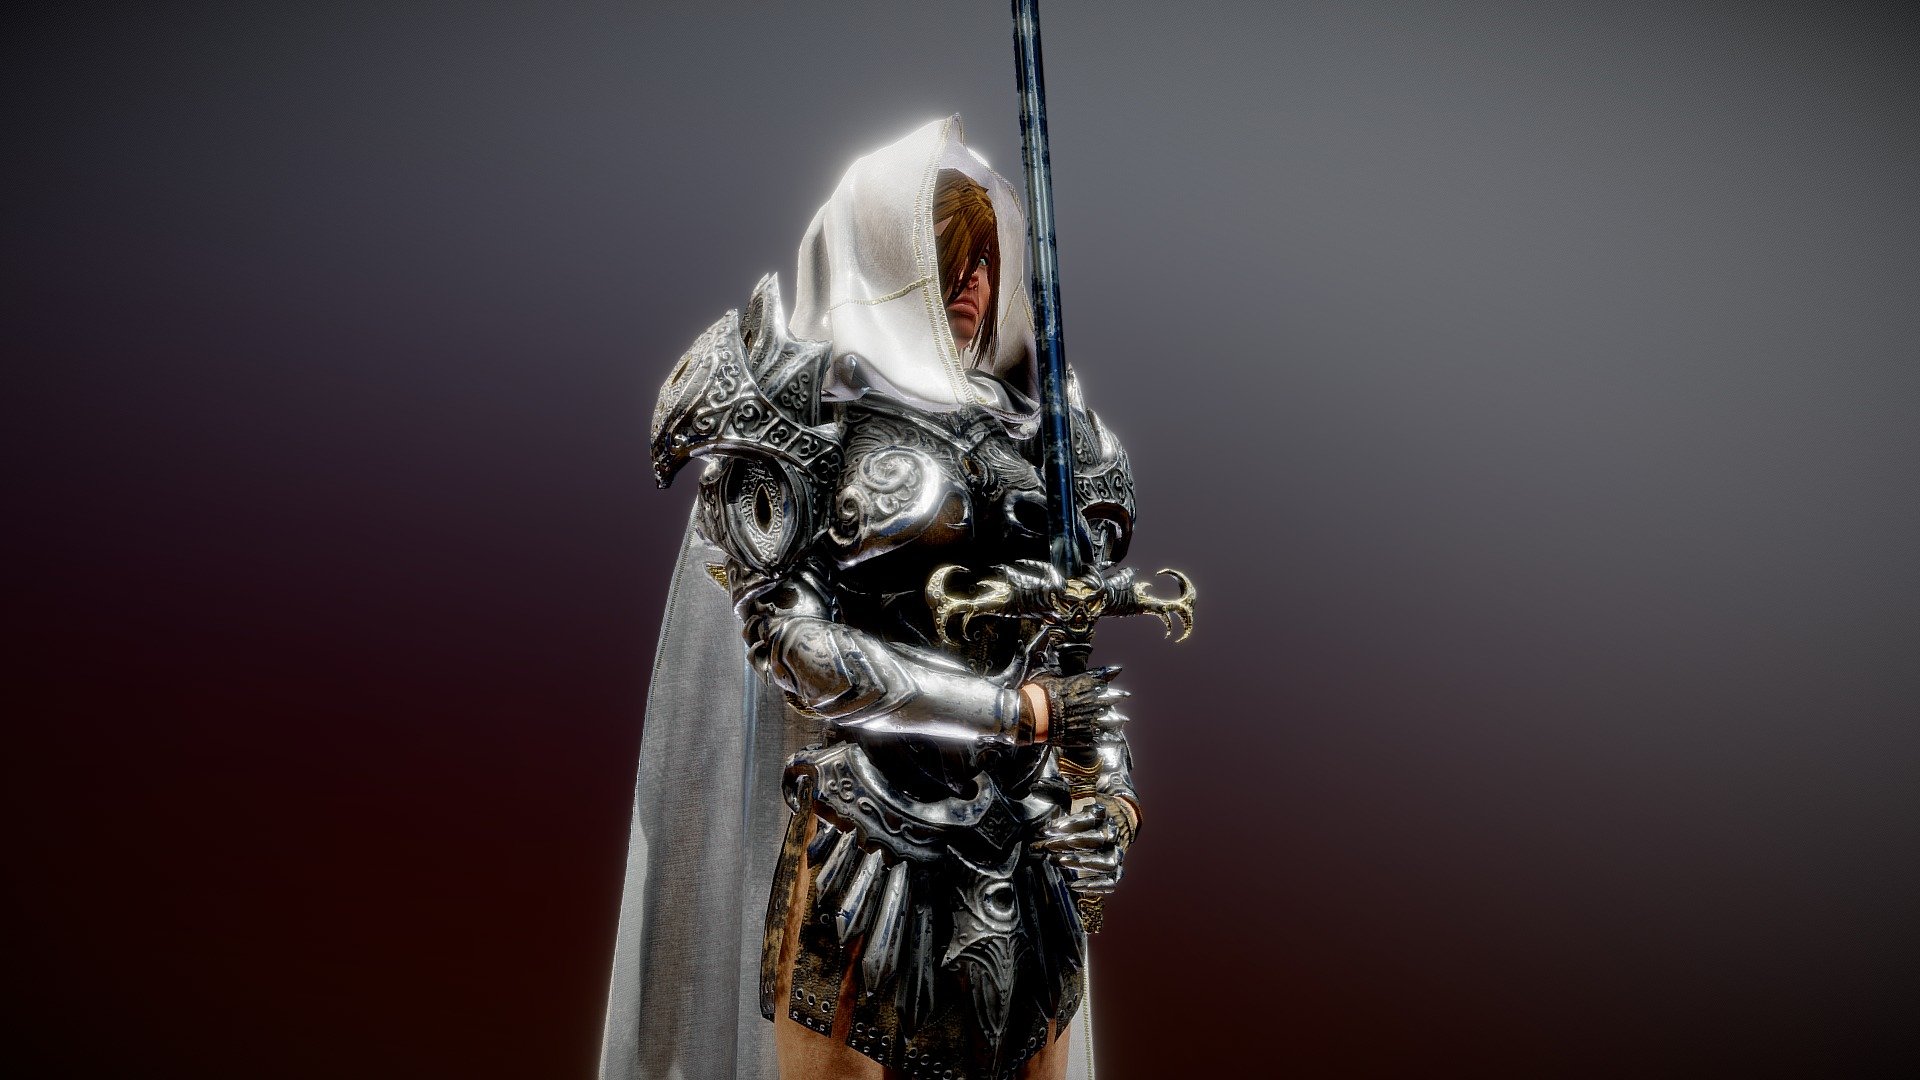 Female Knight